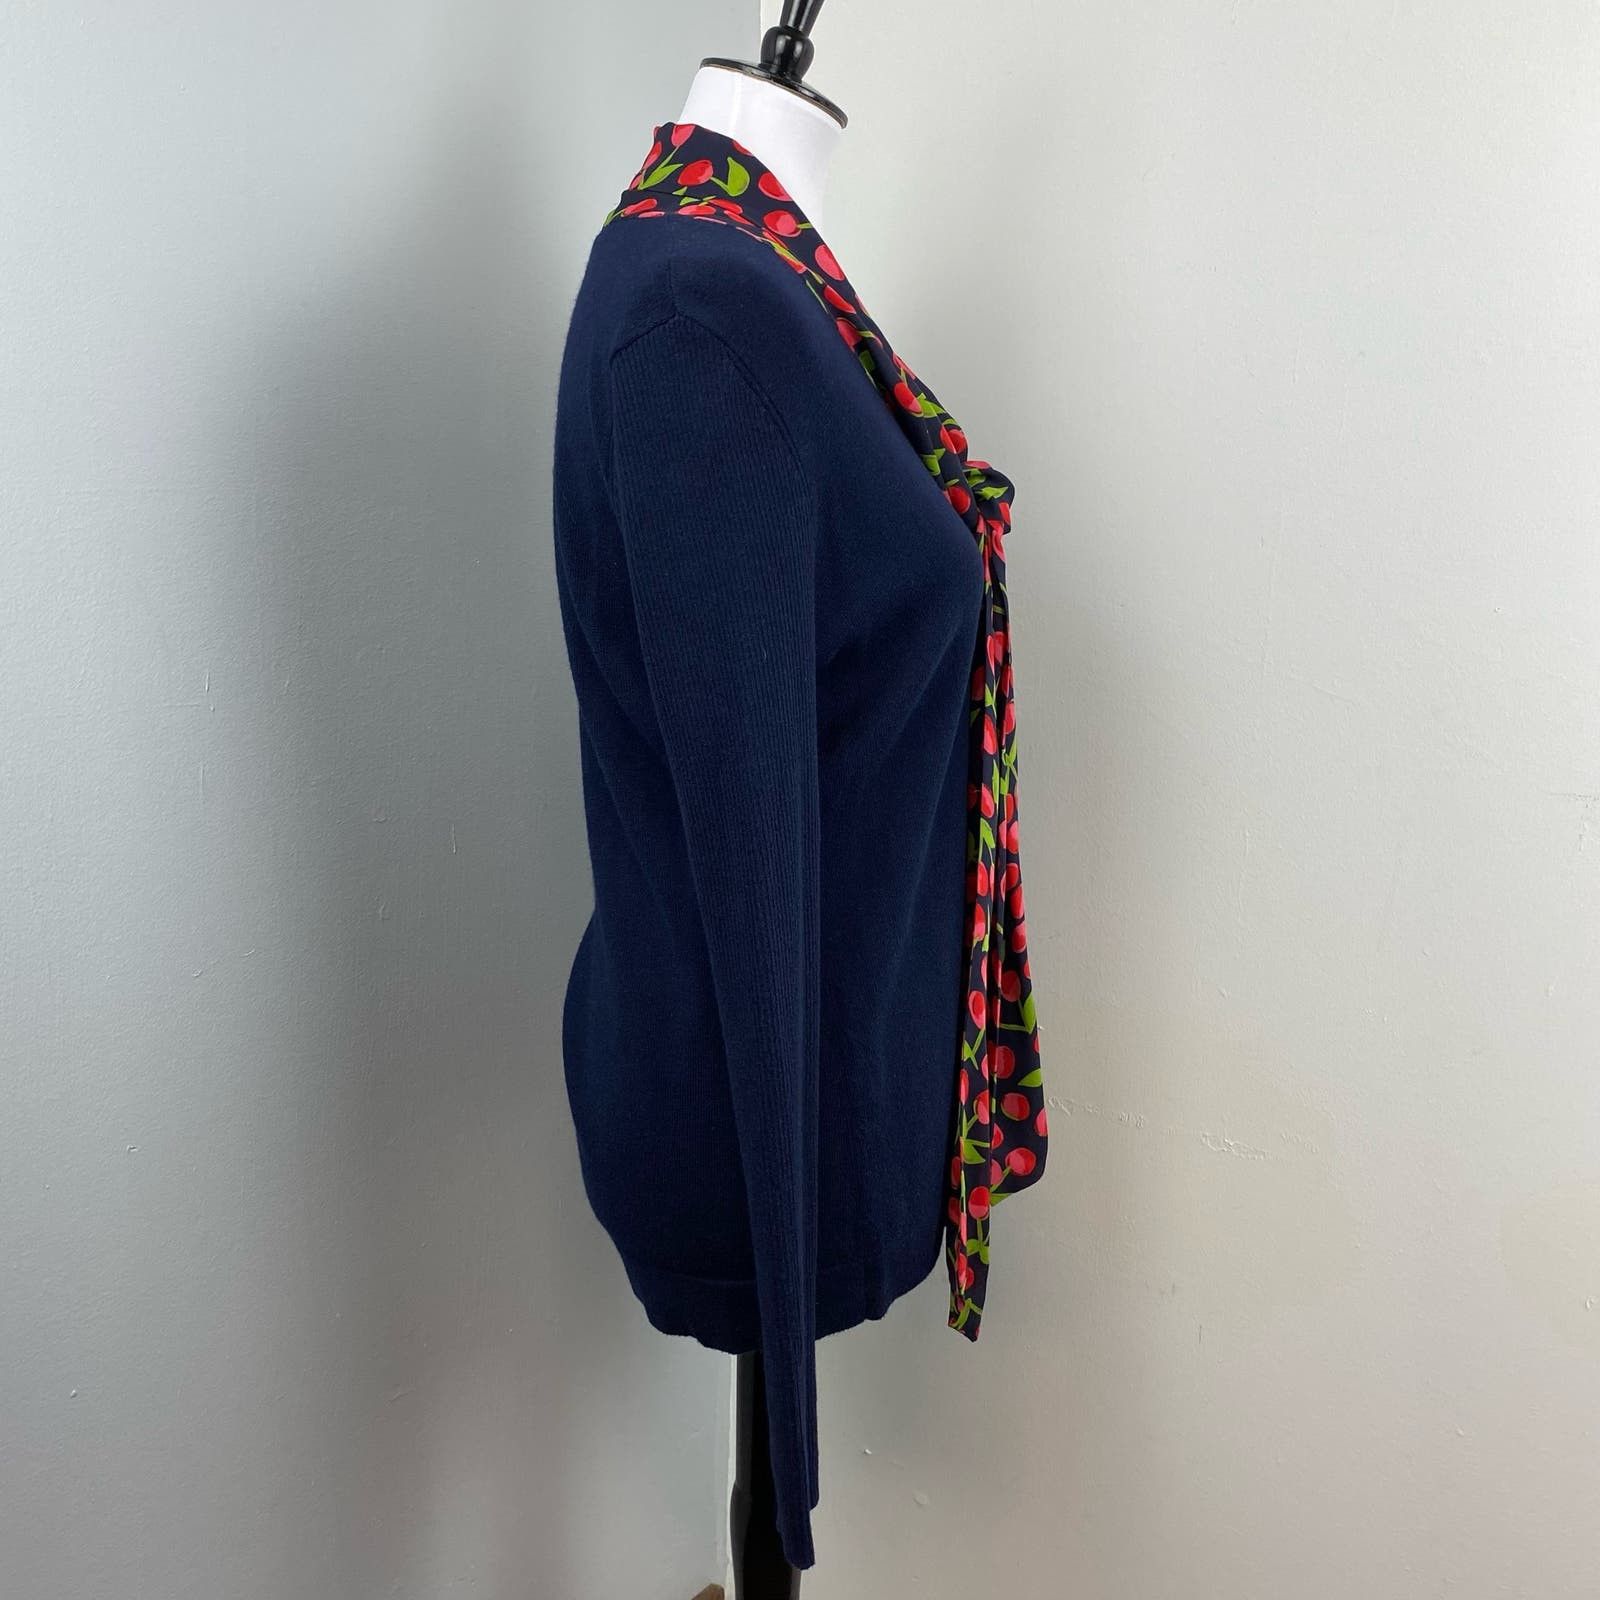 Tory Burch Tory Burch Navy Cashmere Silk Cherry Print Neck Tie Sweater Size L / US 10 / IT 46 - 4 Thumbnail